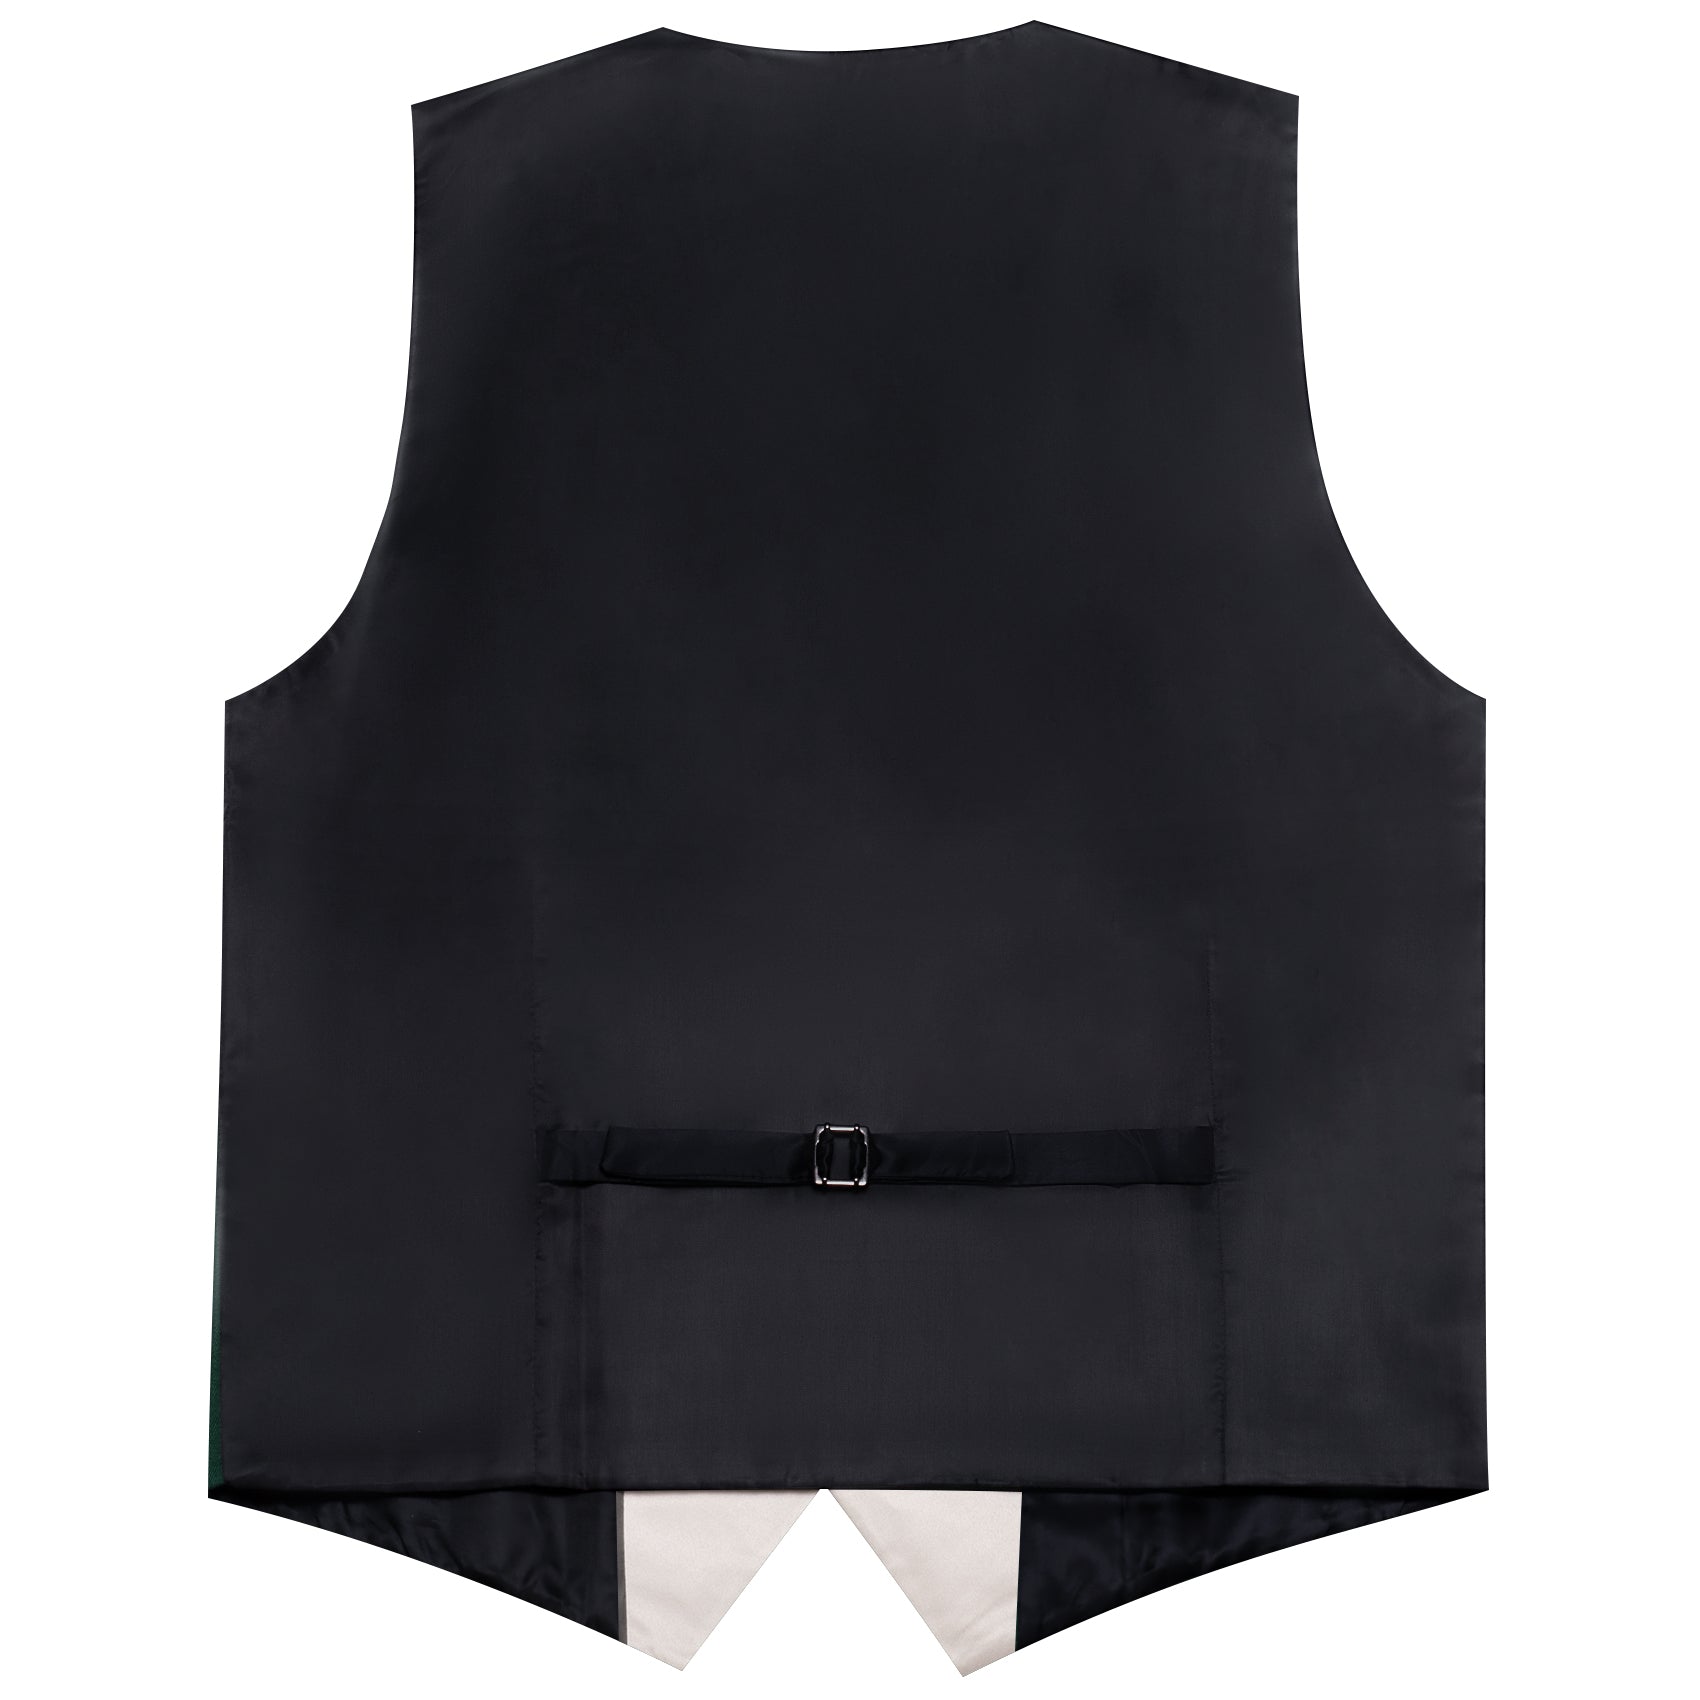 Barry.wang Ivory Solid Vest Waistcoat Set